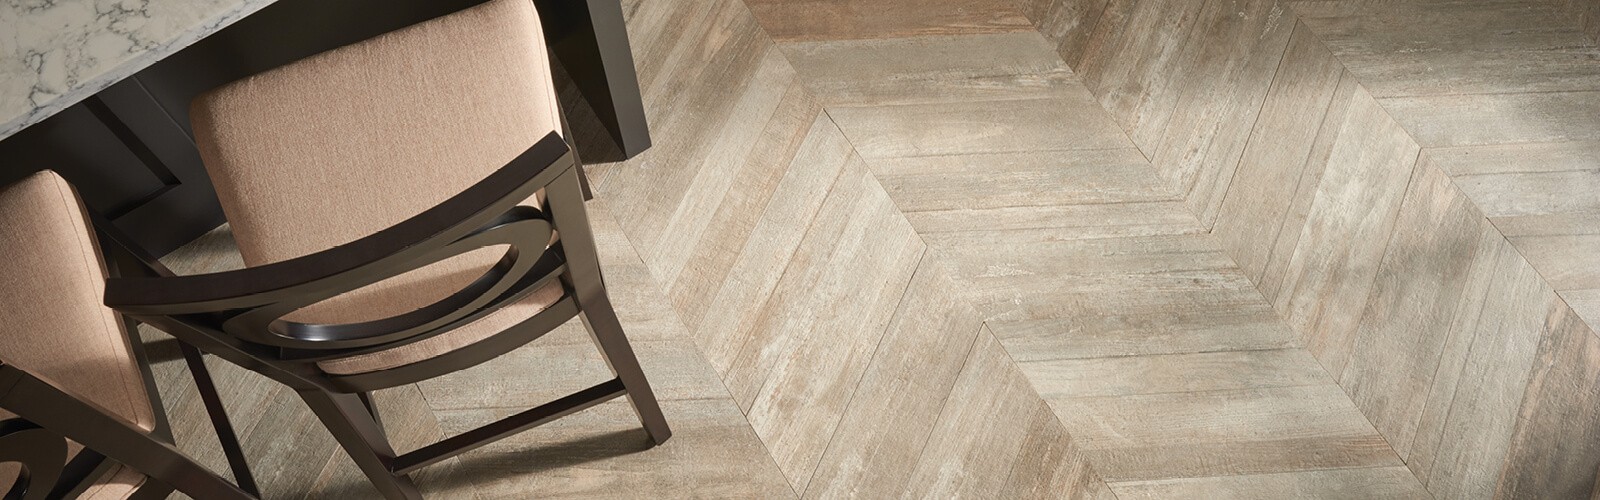 Tile flooring | Staff Carpet